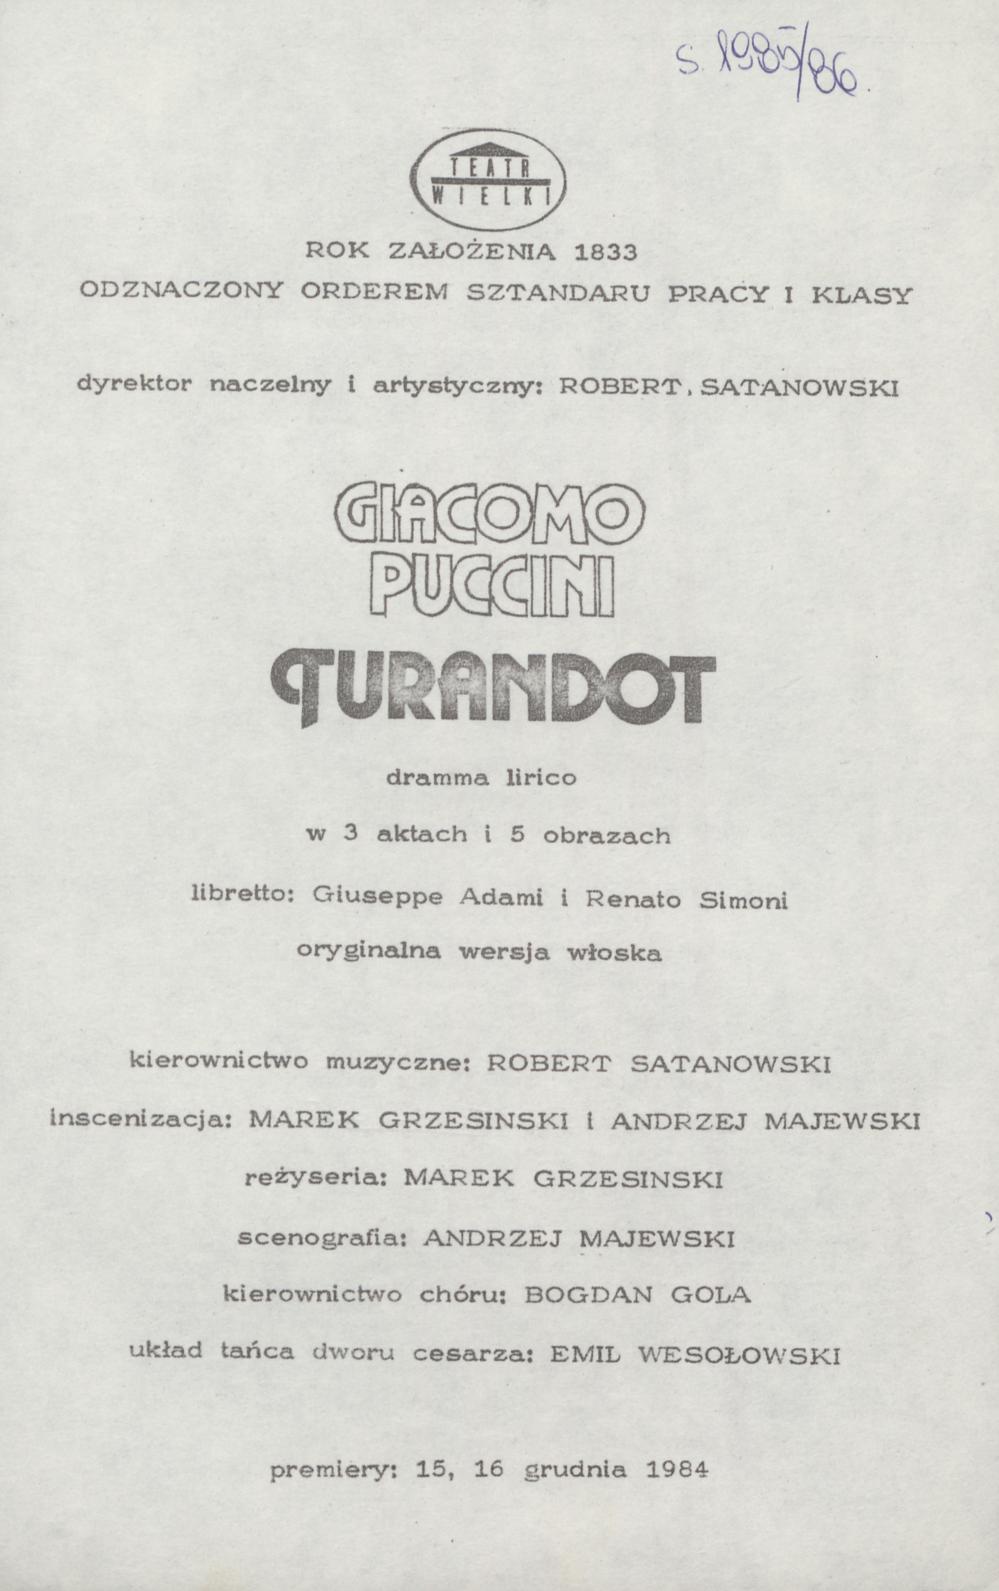 Wkładka obsadowa „Turandot” Giacomo Puccini 20-10-1985